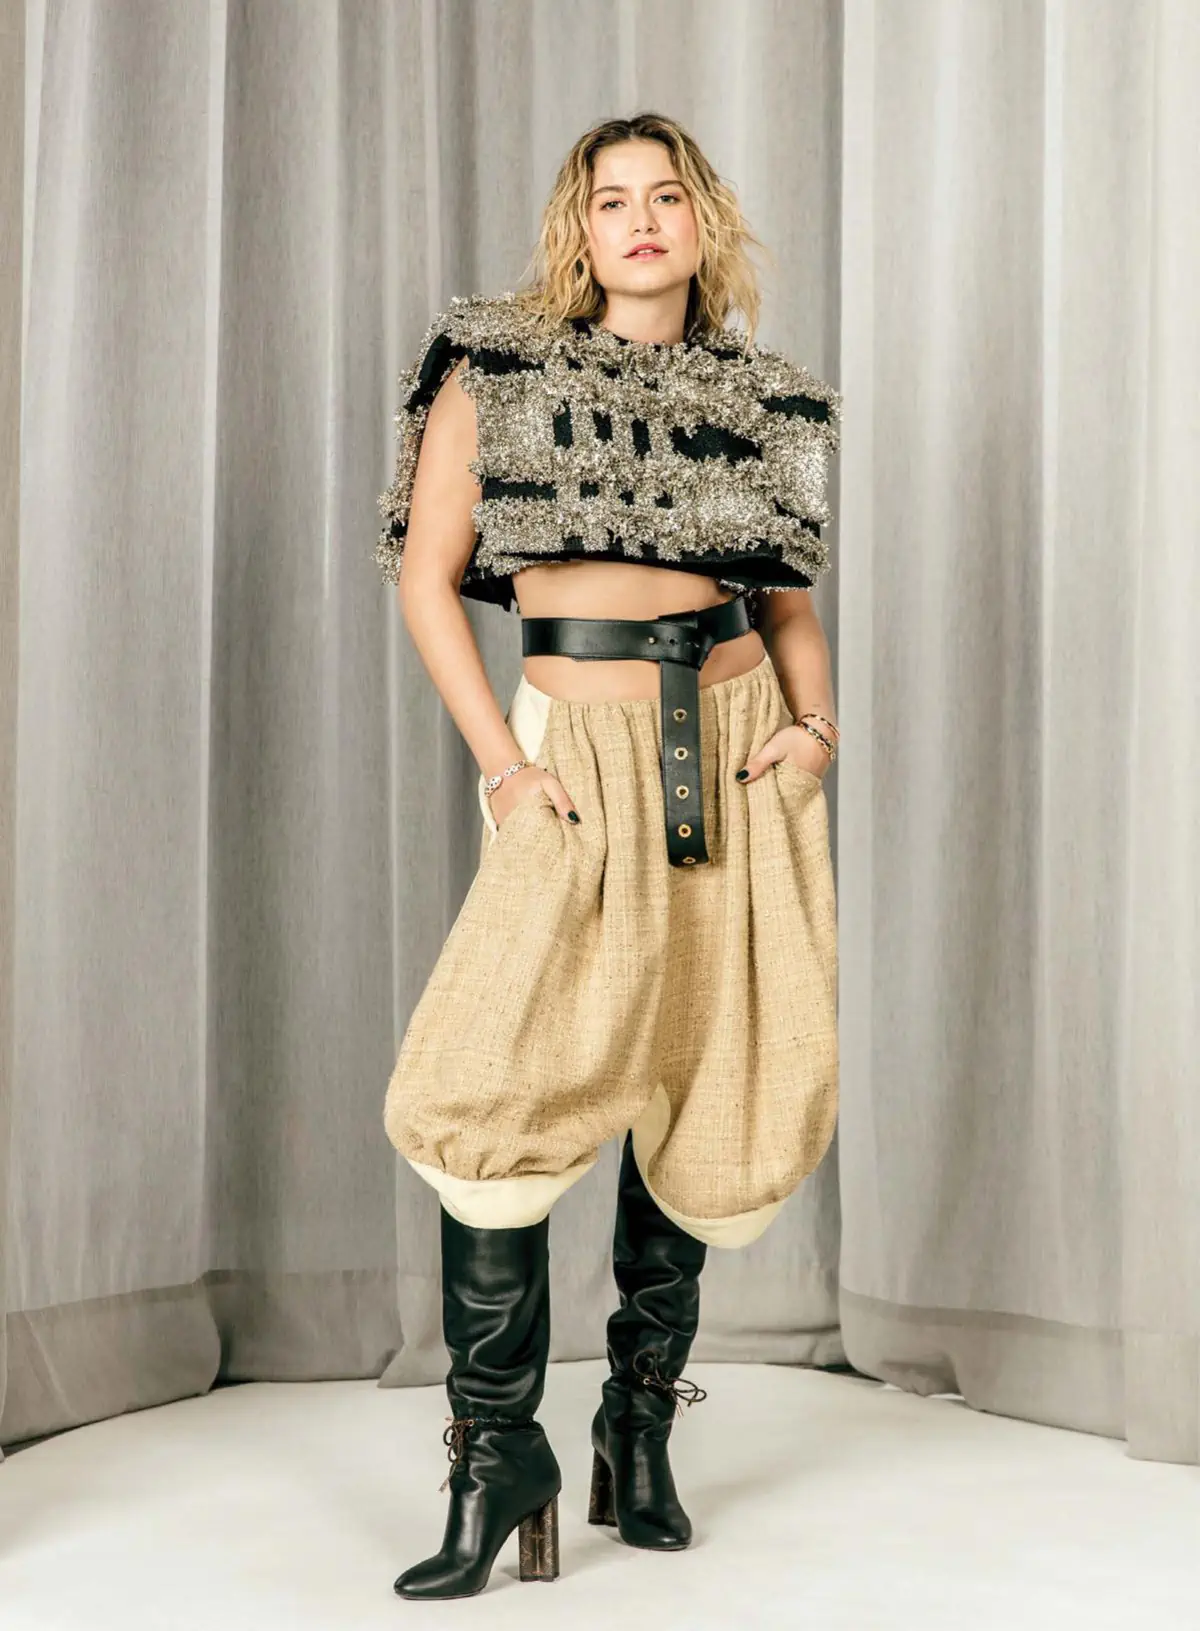 Sofía Reyes covers Vogue Latin America February 2023 by Stefan Ruiz